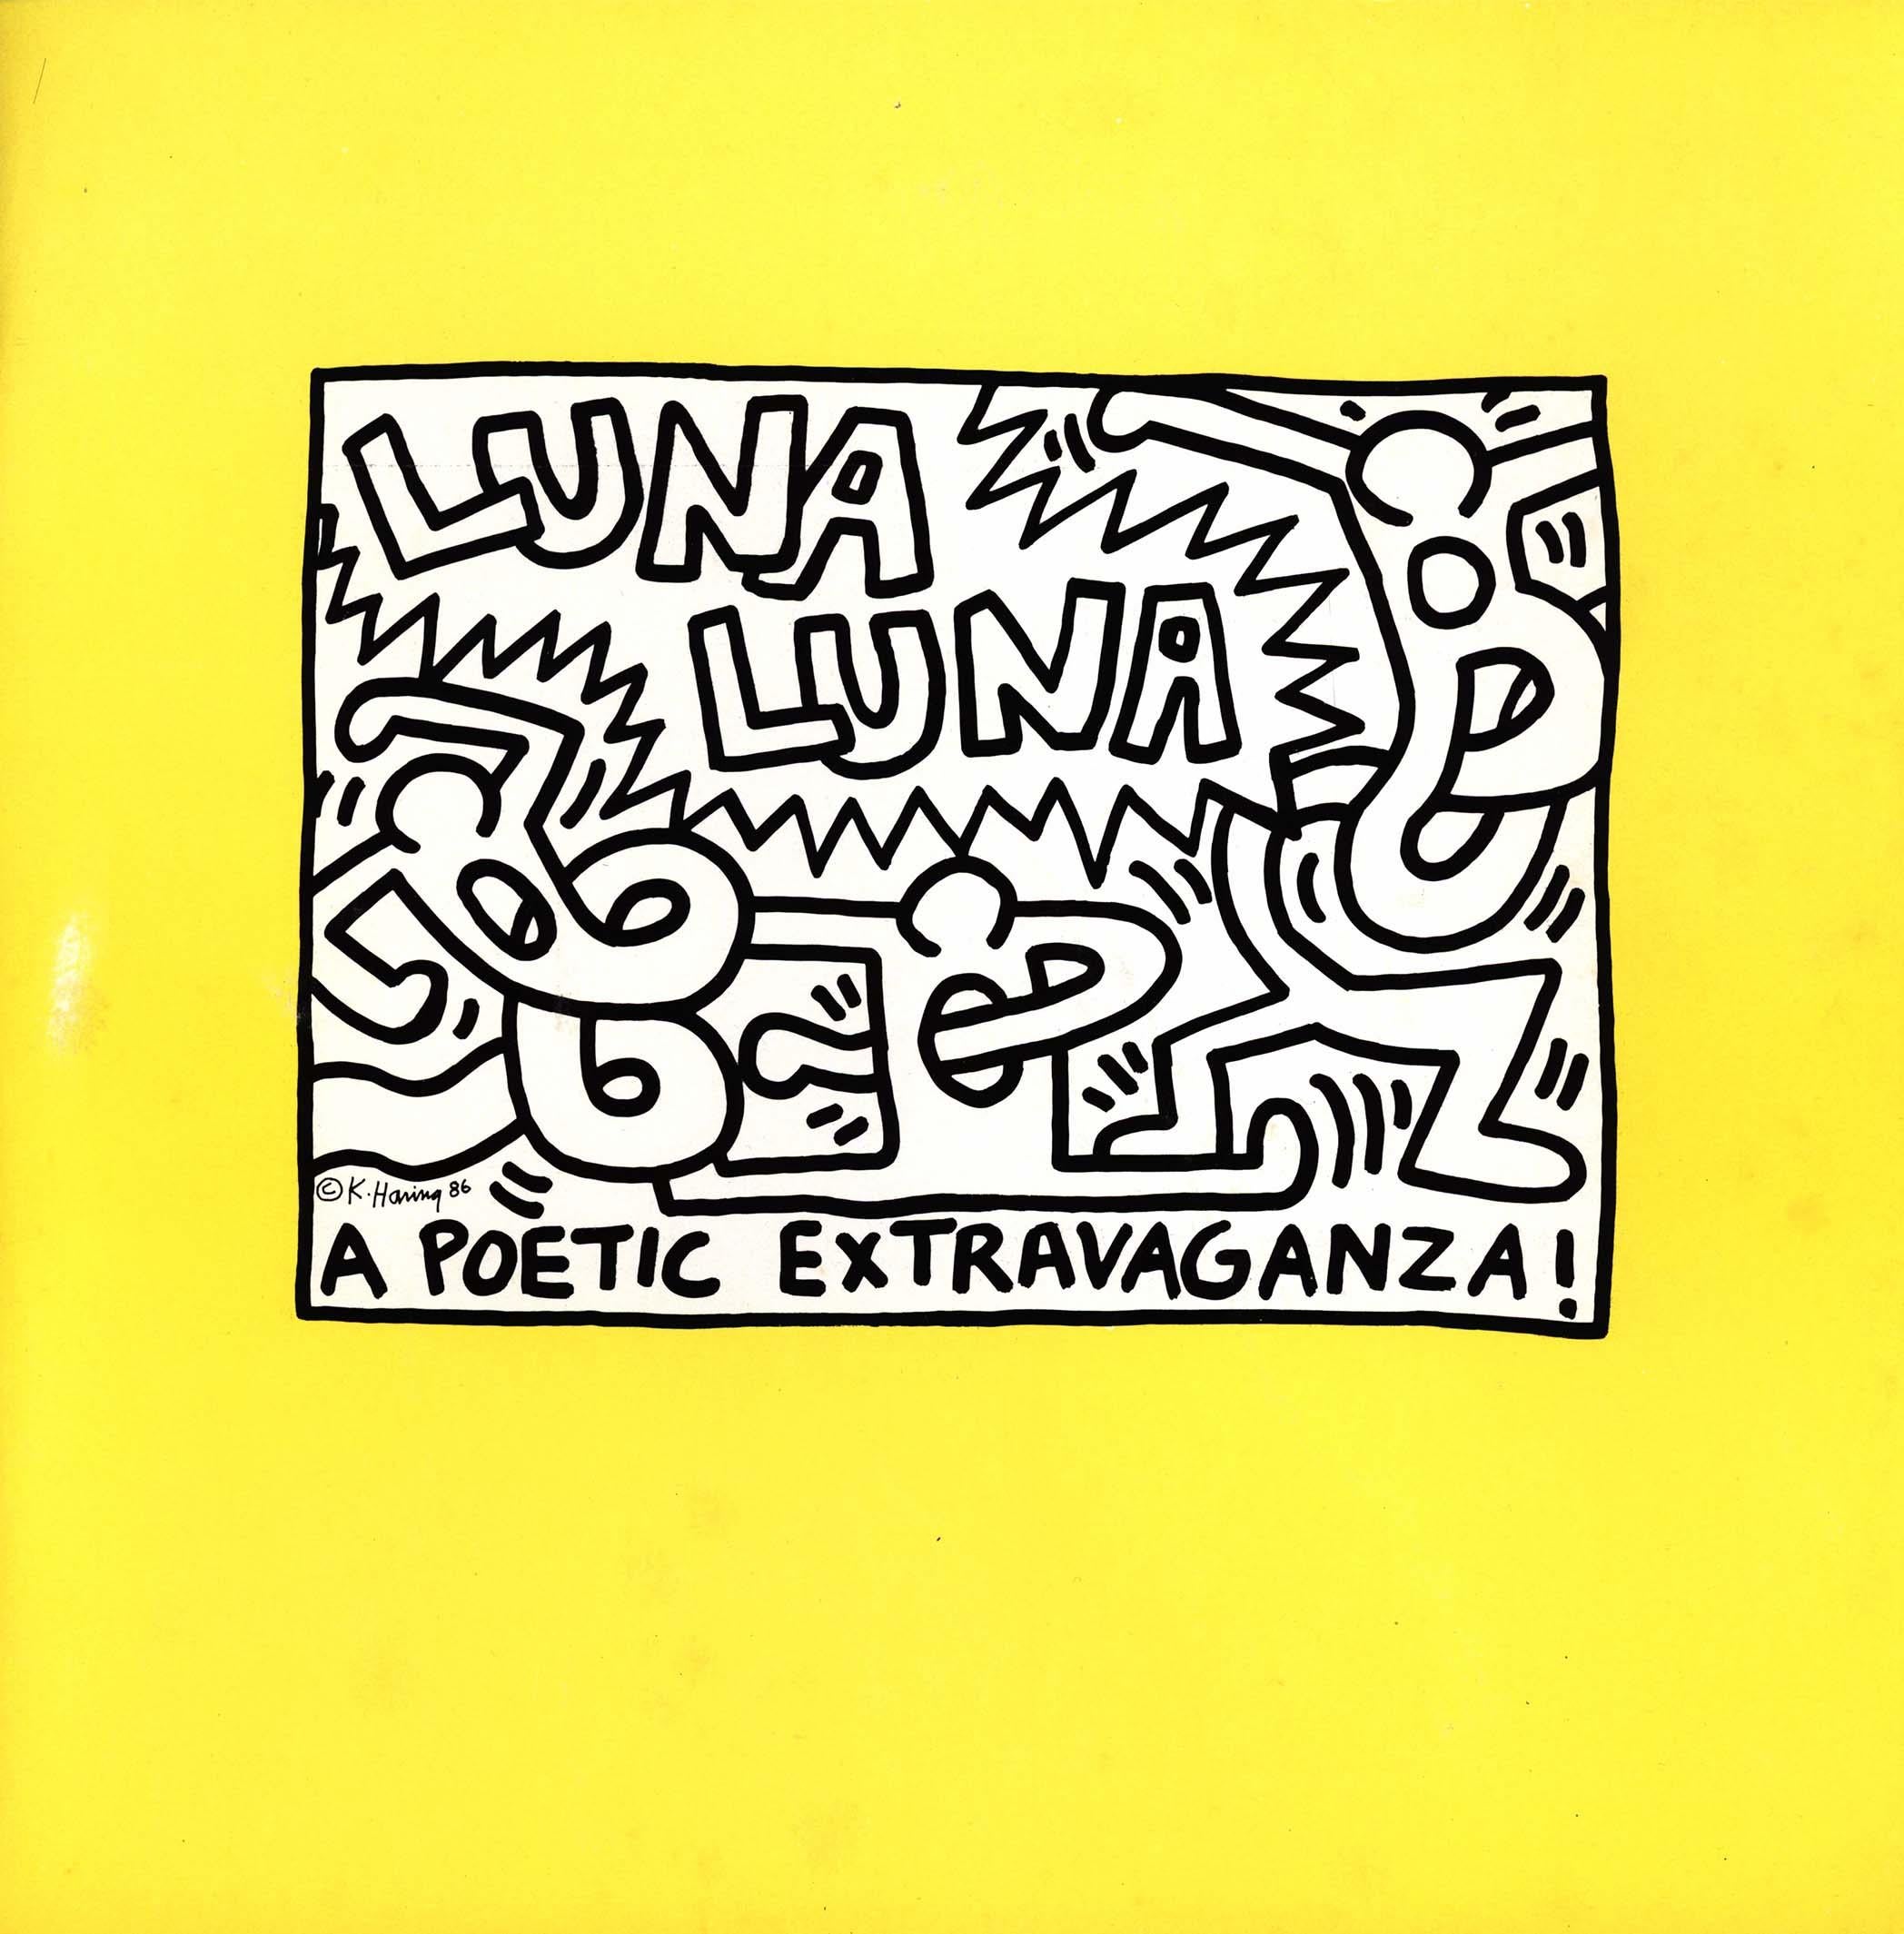 Keith Haring Luna Luna Karussell. A Poetic Extravaganza!, 1986 (Keith haring Luna Luna):
Luna Luna 